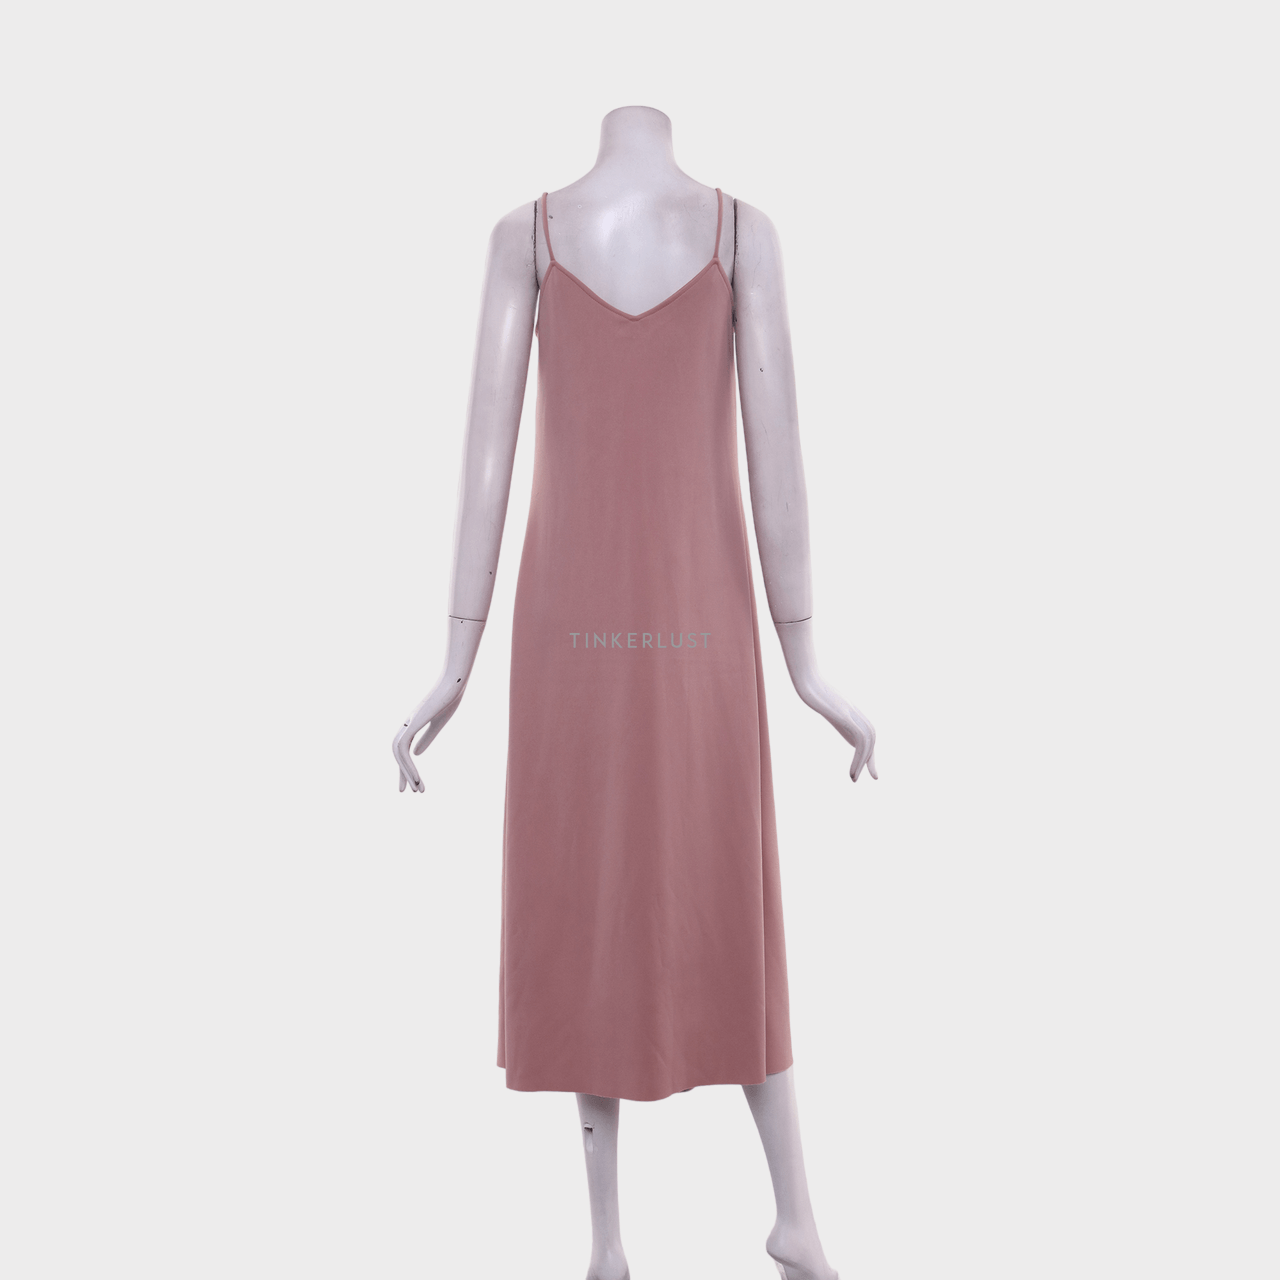 Sovi Atelier x Mme Huillet Pink & Cream Long Dress